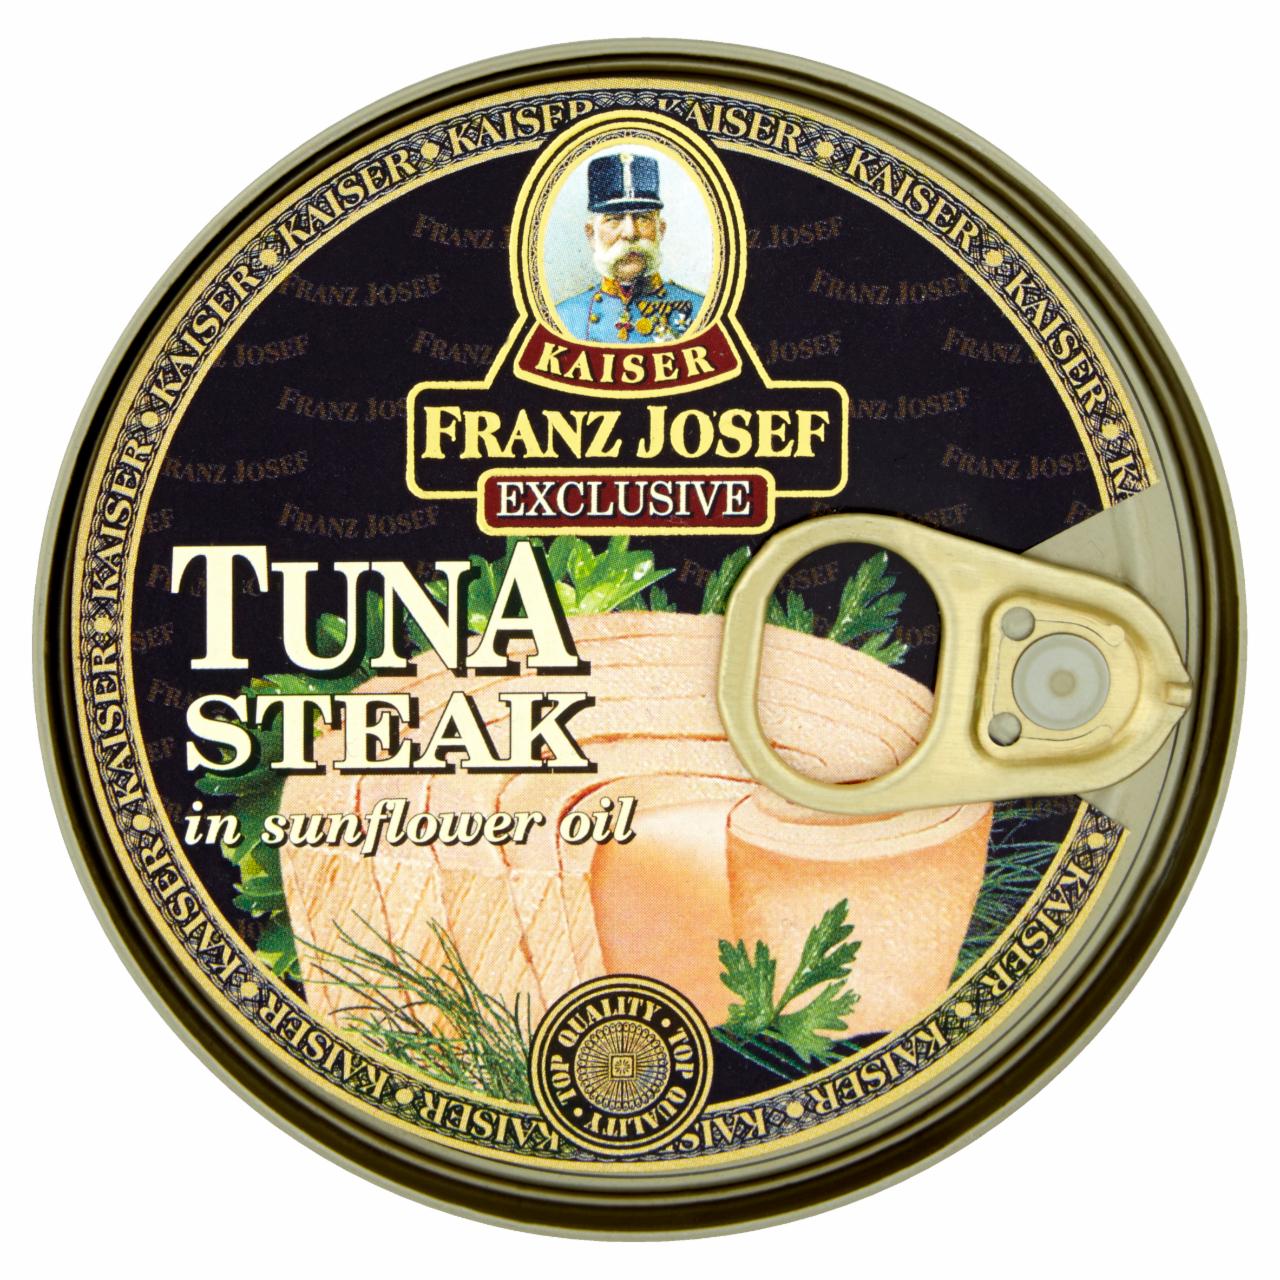 Képek - Kaiser Franz Josef Exclusive tonhal steak napraforgóolajban 170 g